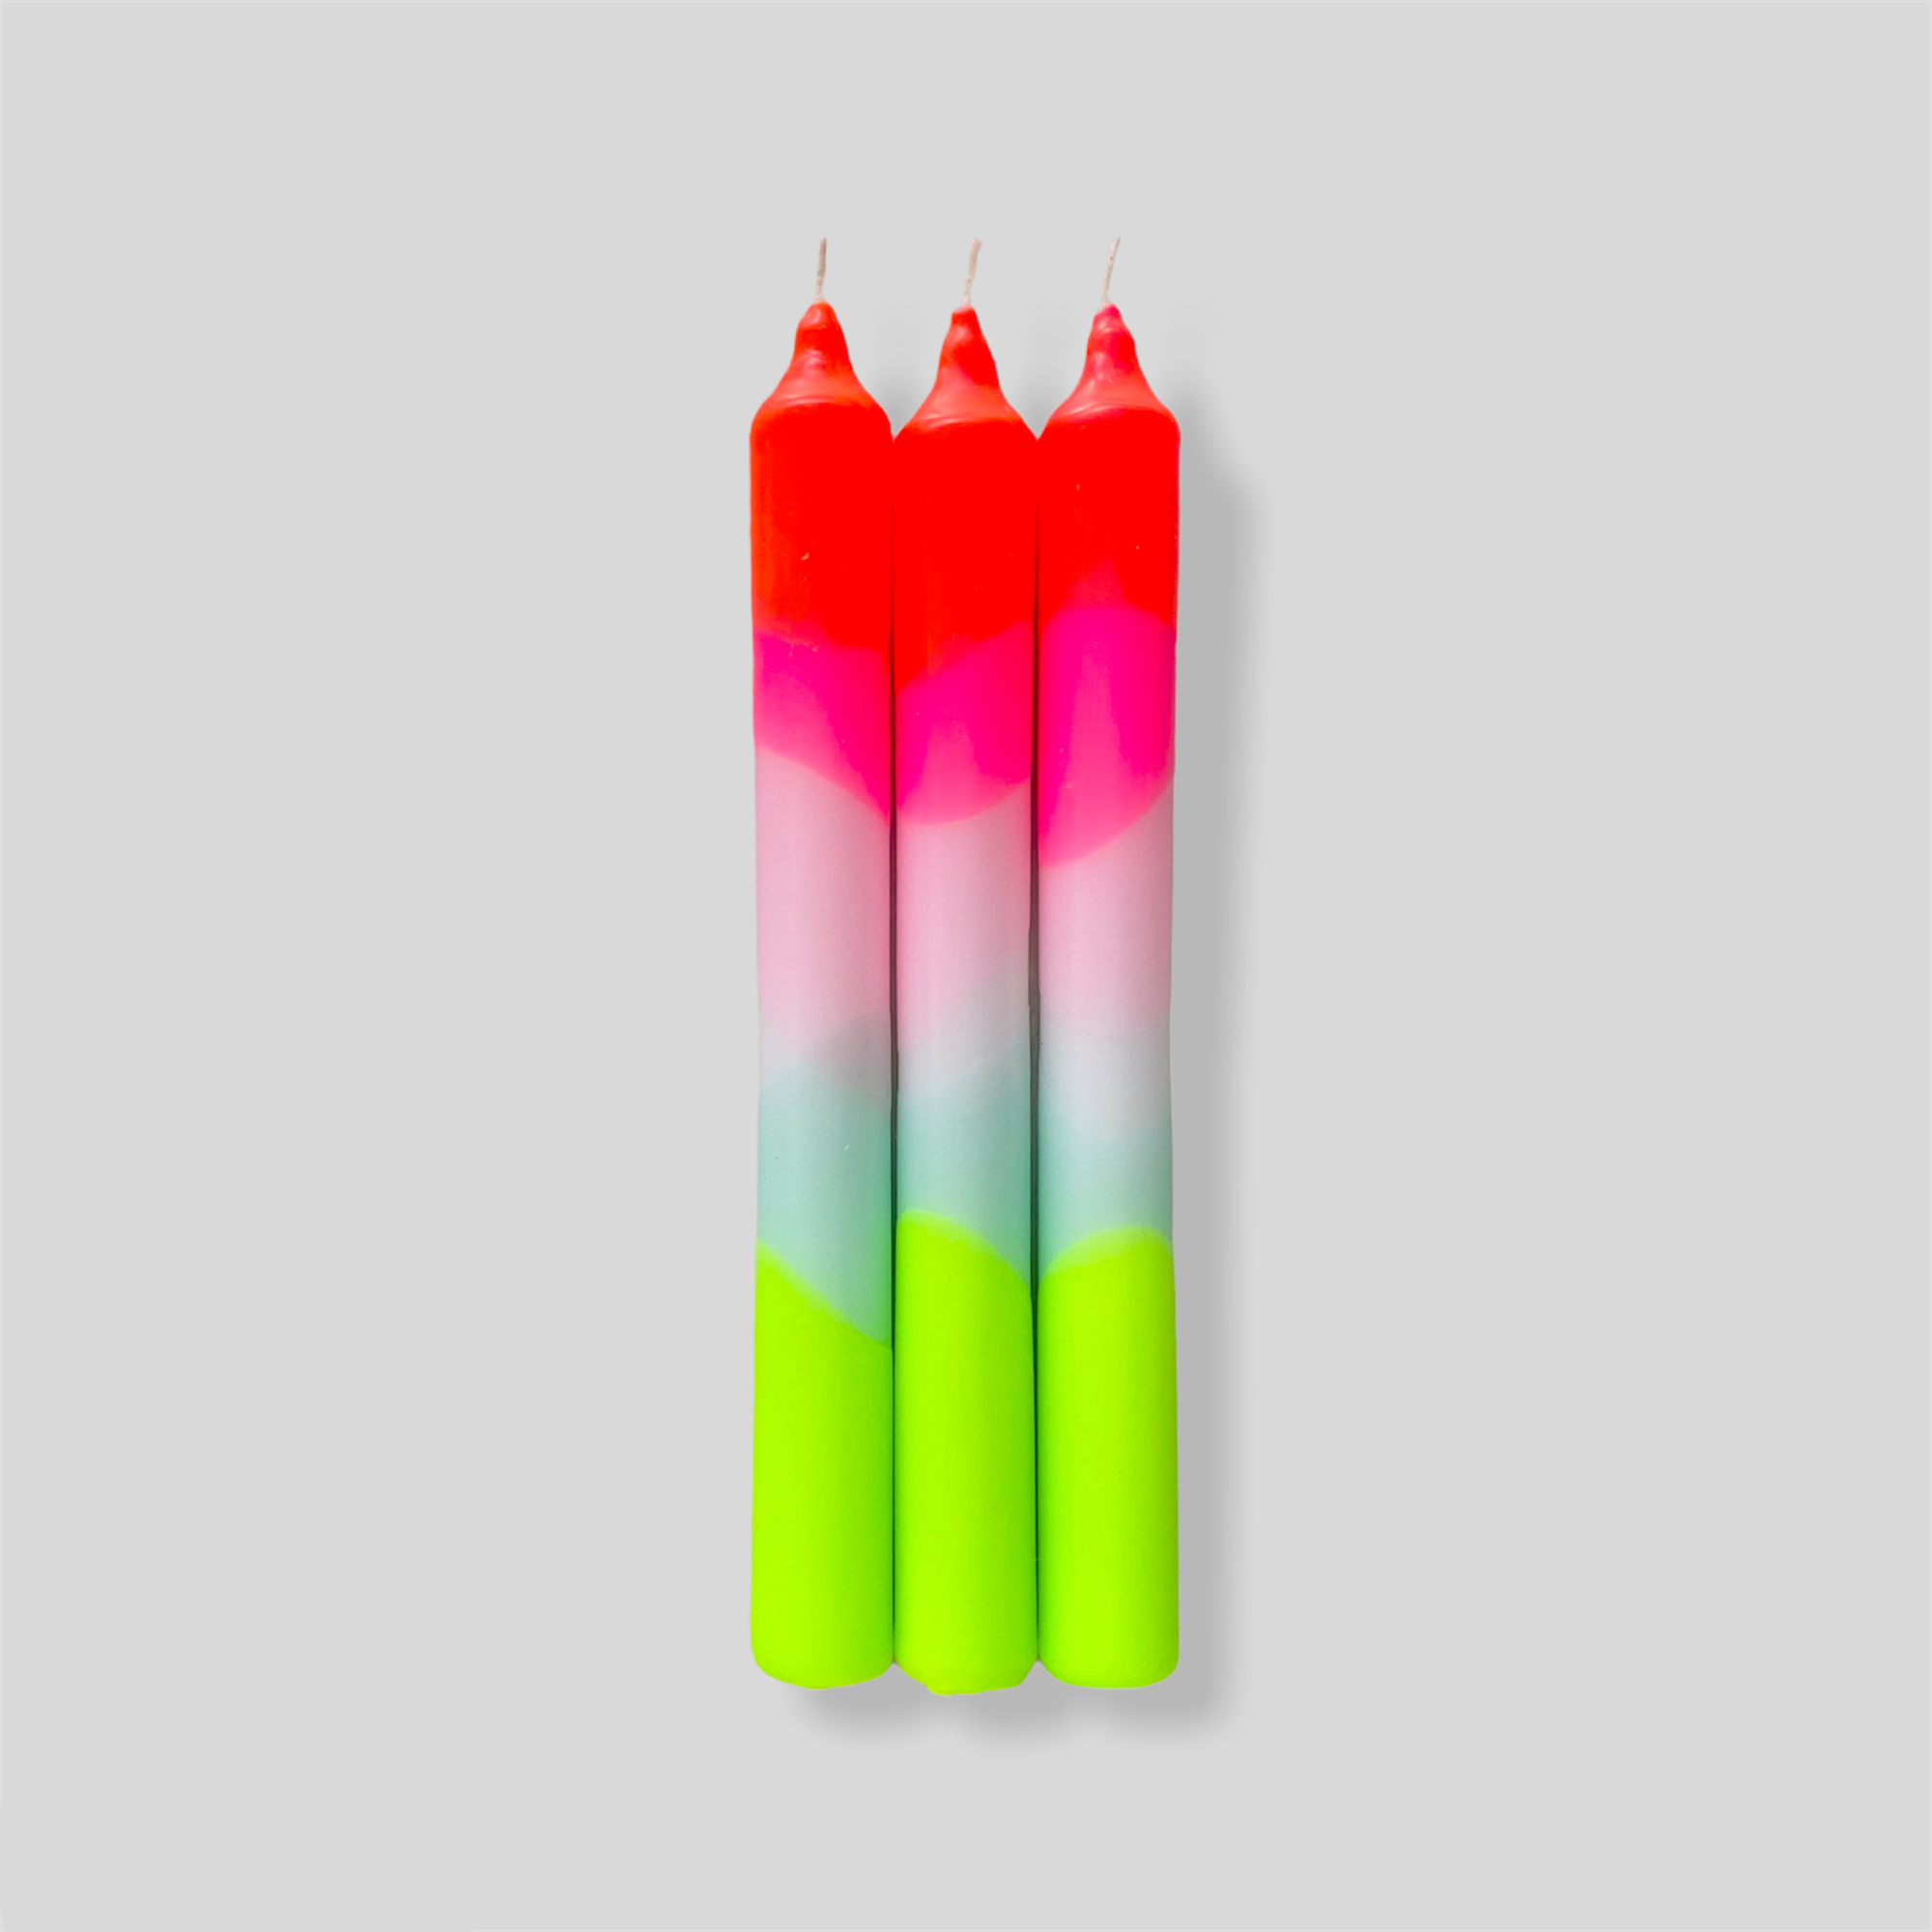 Dip Dye Neon Candles - Lollipop Trees